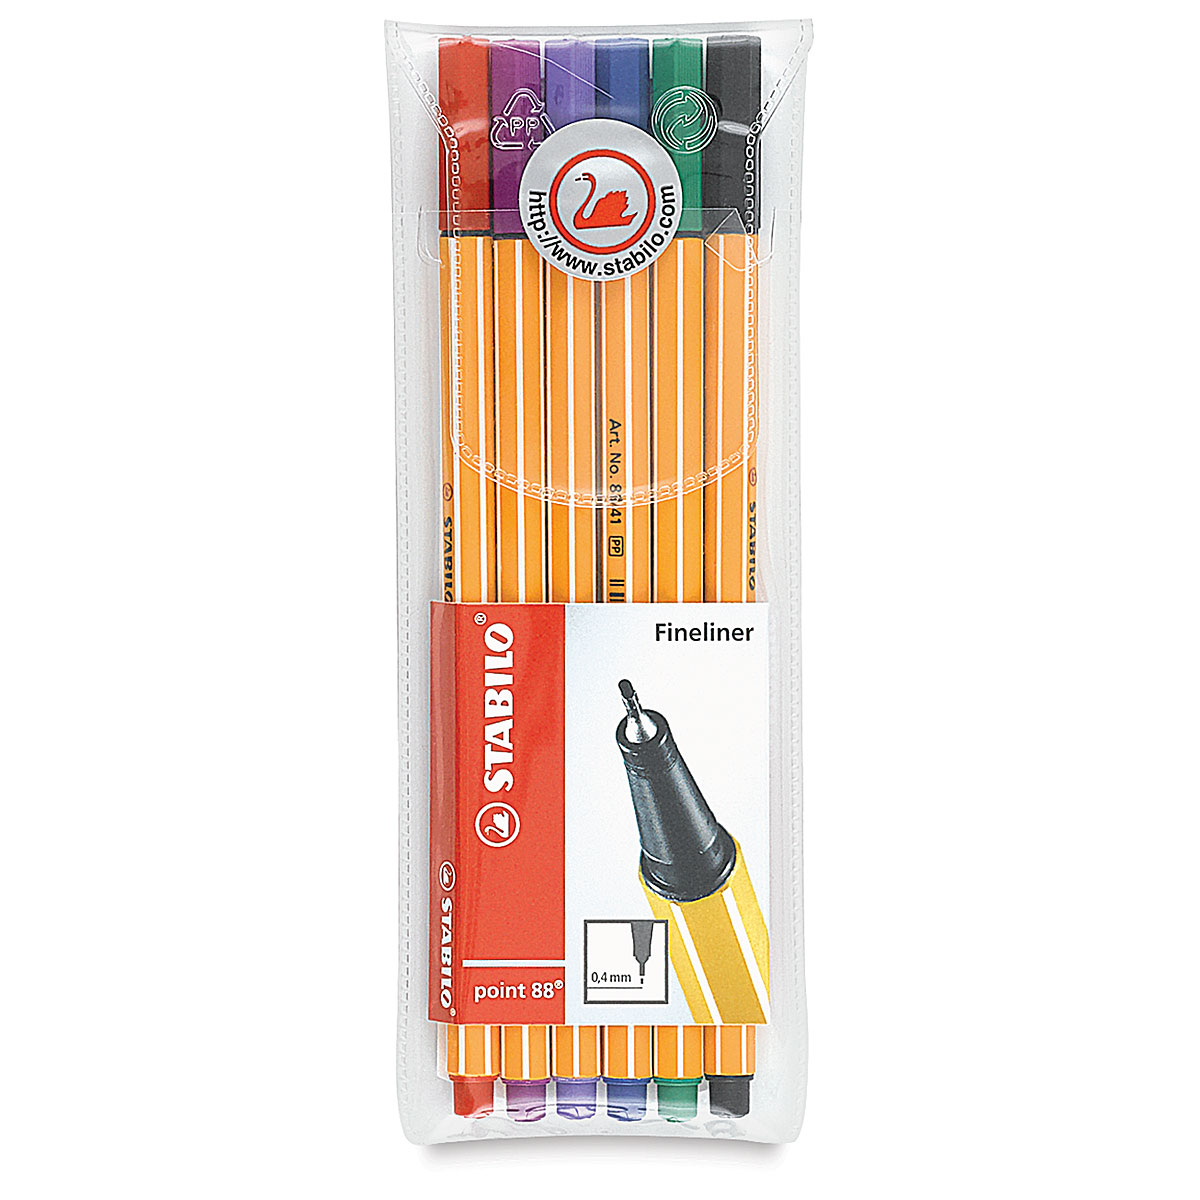 Shinkan Leninisme eer Stabilo Point 88 Fineliner Pen Set - Assorted Colors, Wallet, Set of 6 |  BLICK Art Materials